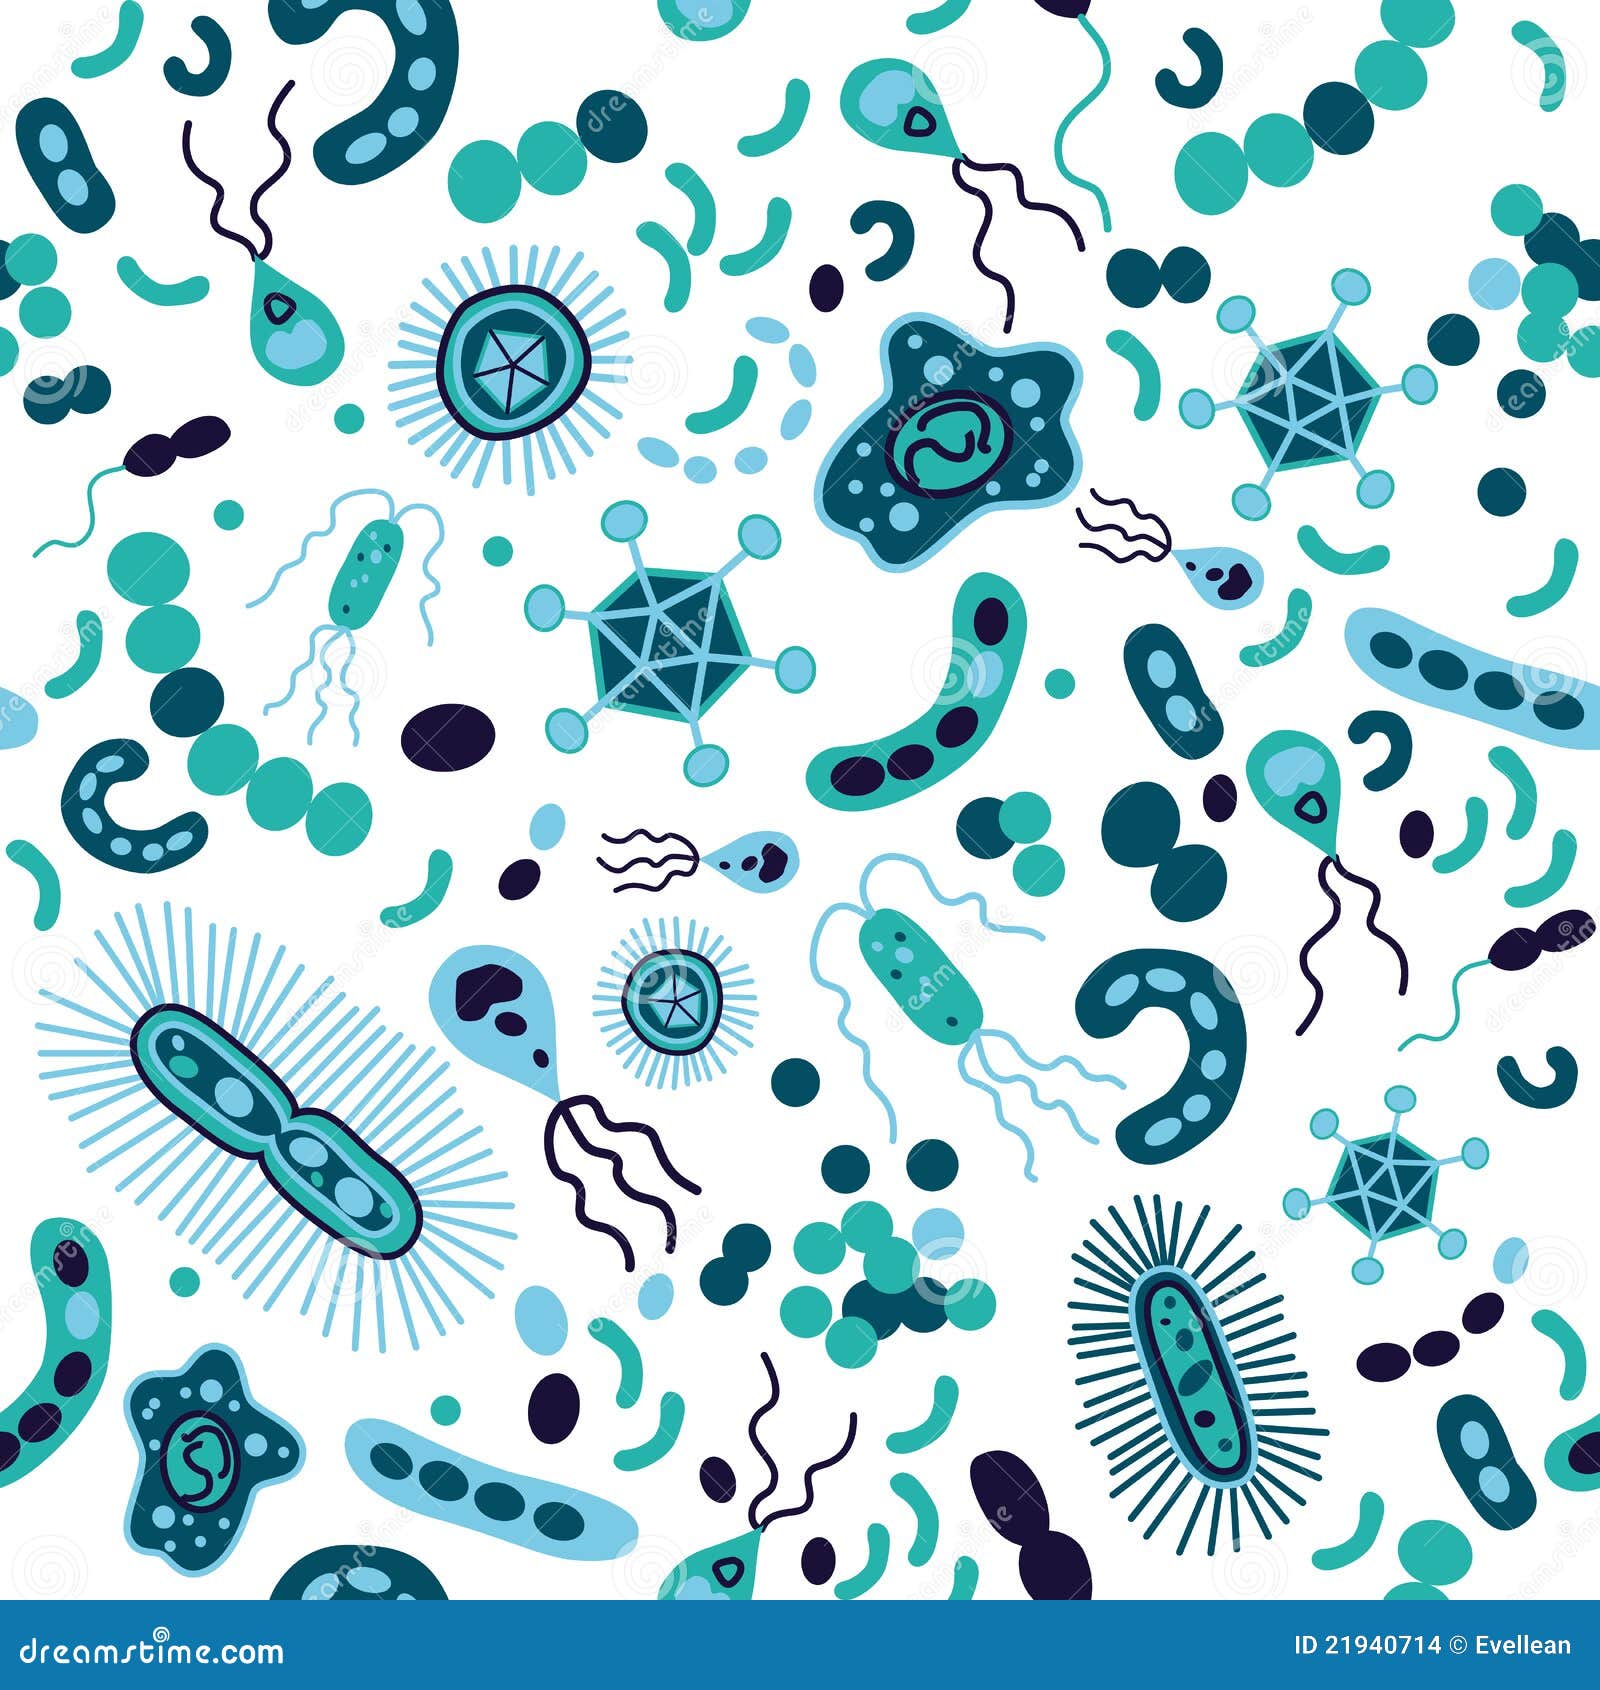 bacterium seamless